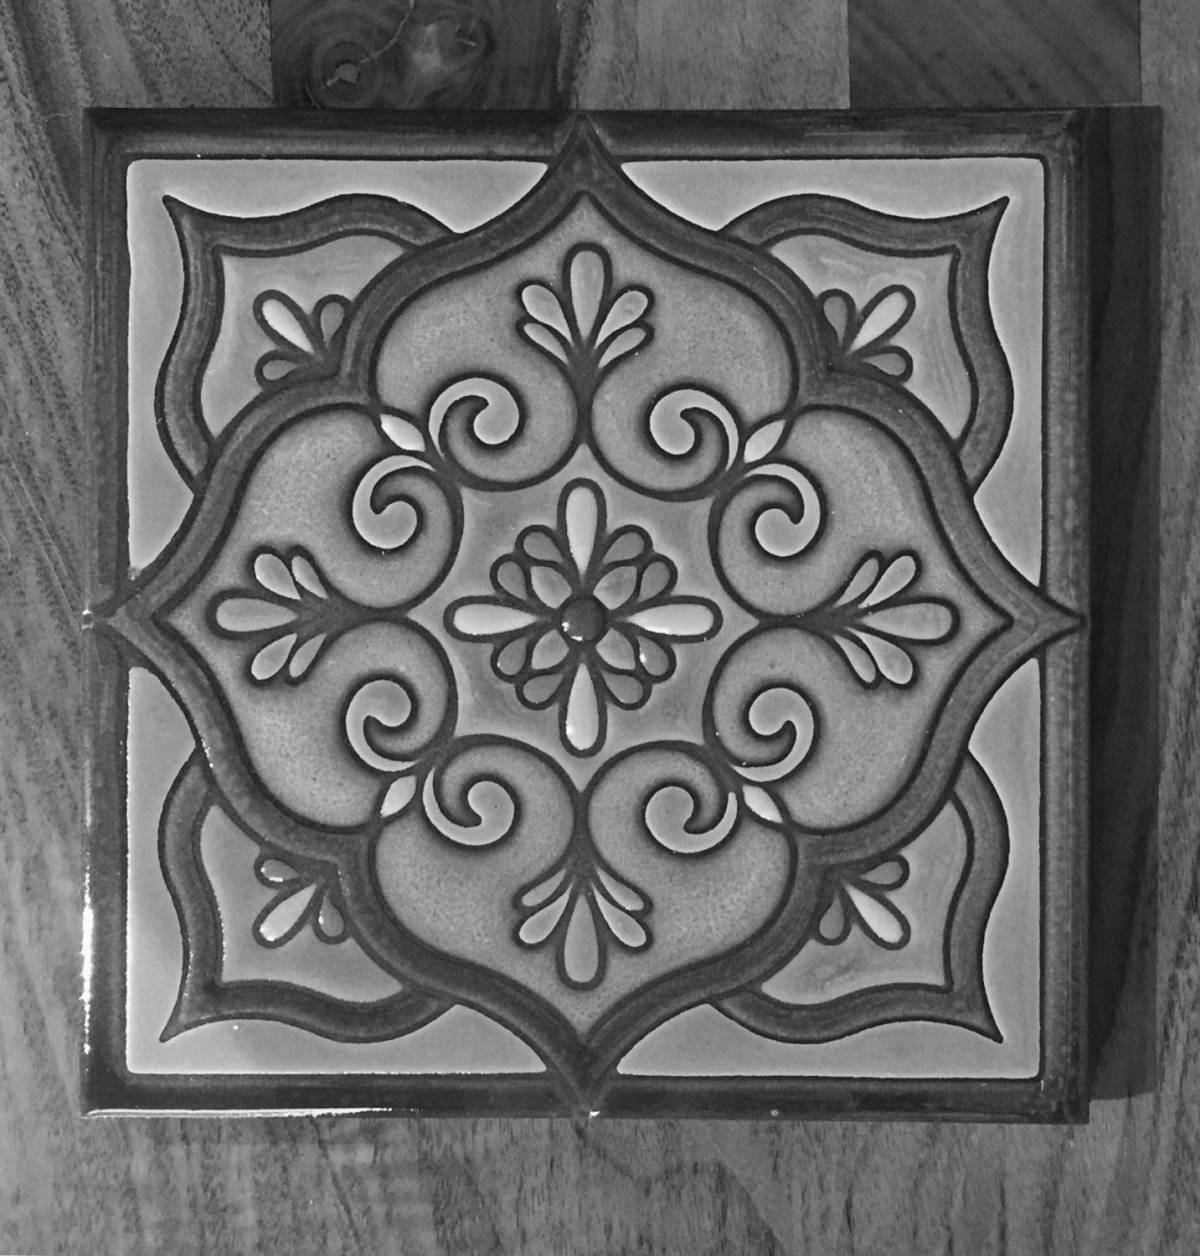 Intricate handmade ceramic tiles